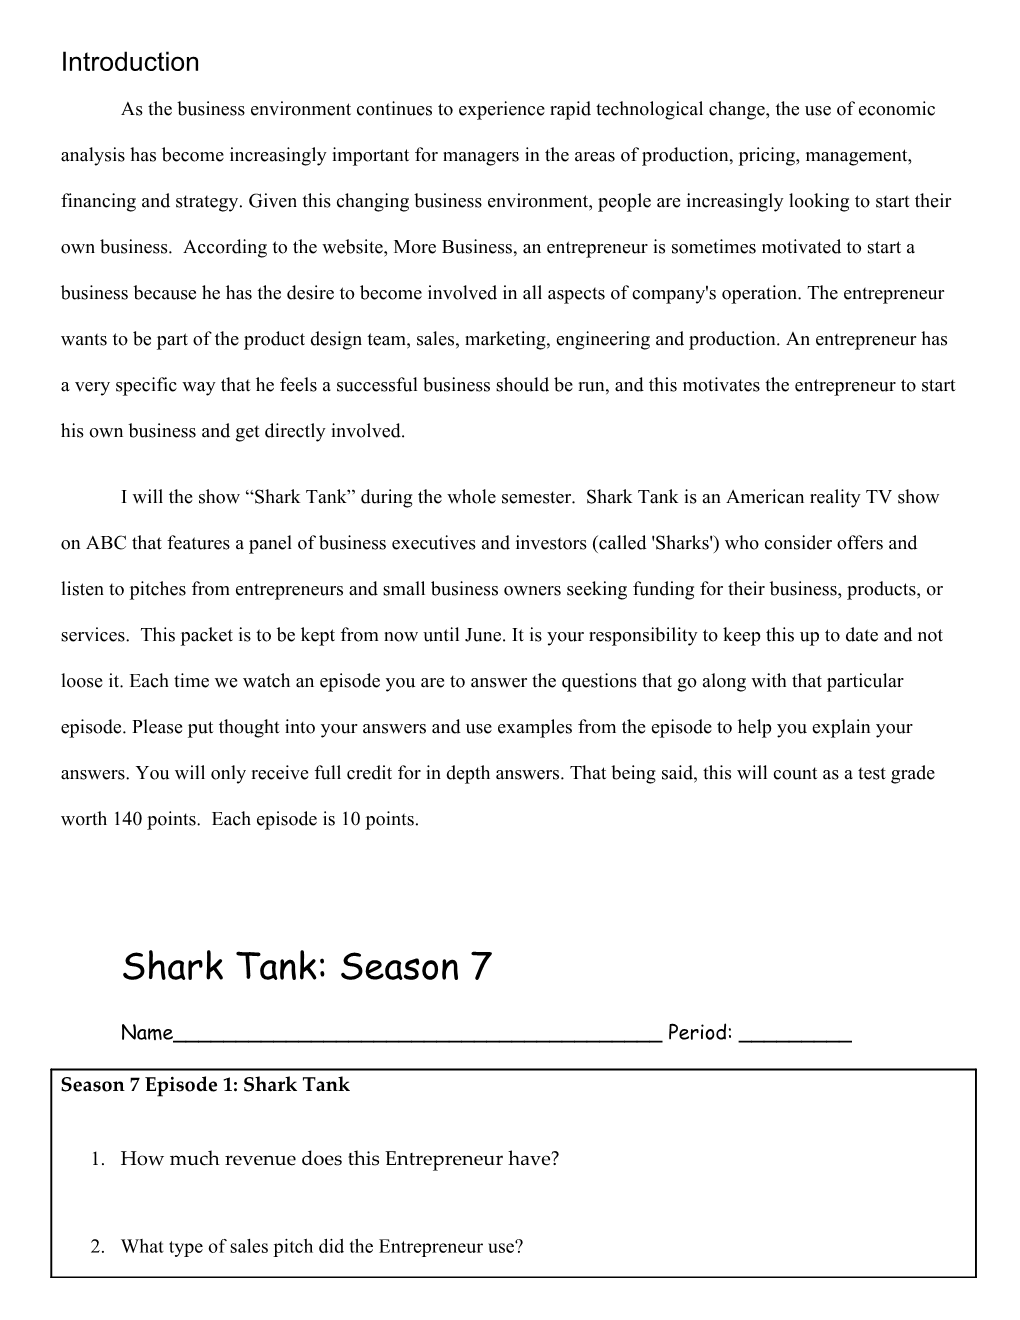 Shark Tank: Season 7